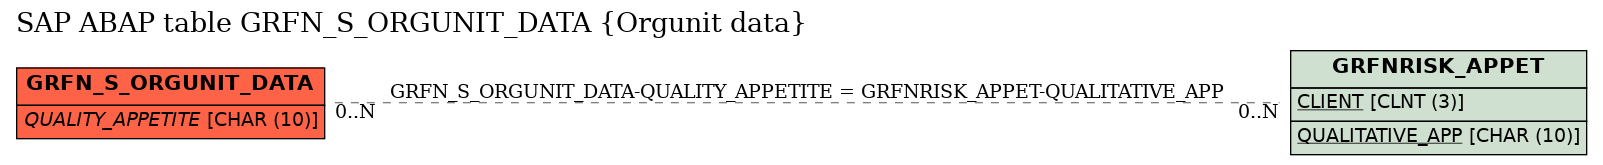 E-R Diagram for table GRFN_S_ORGUNIT_DATA (Orgunit data)